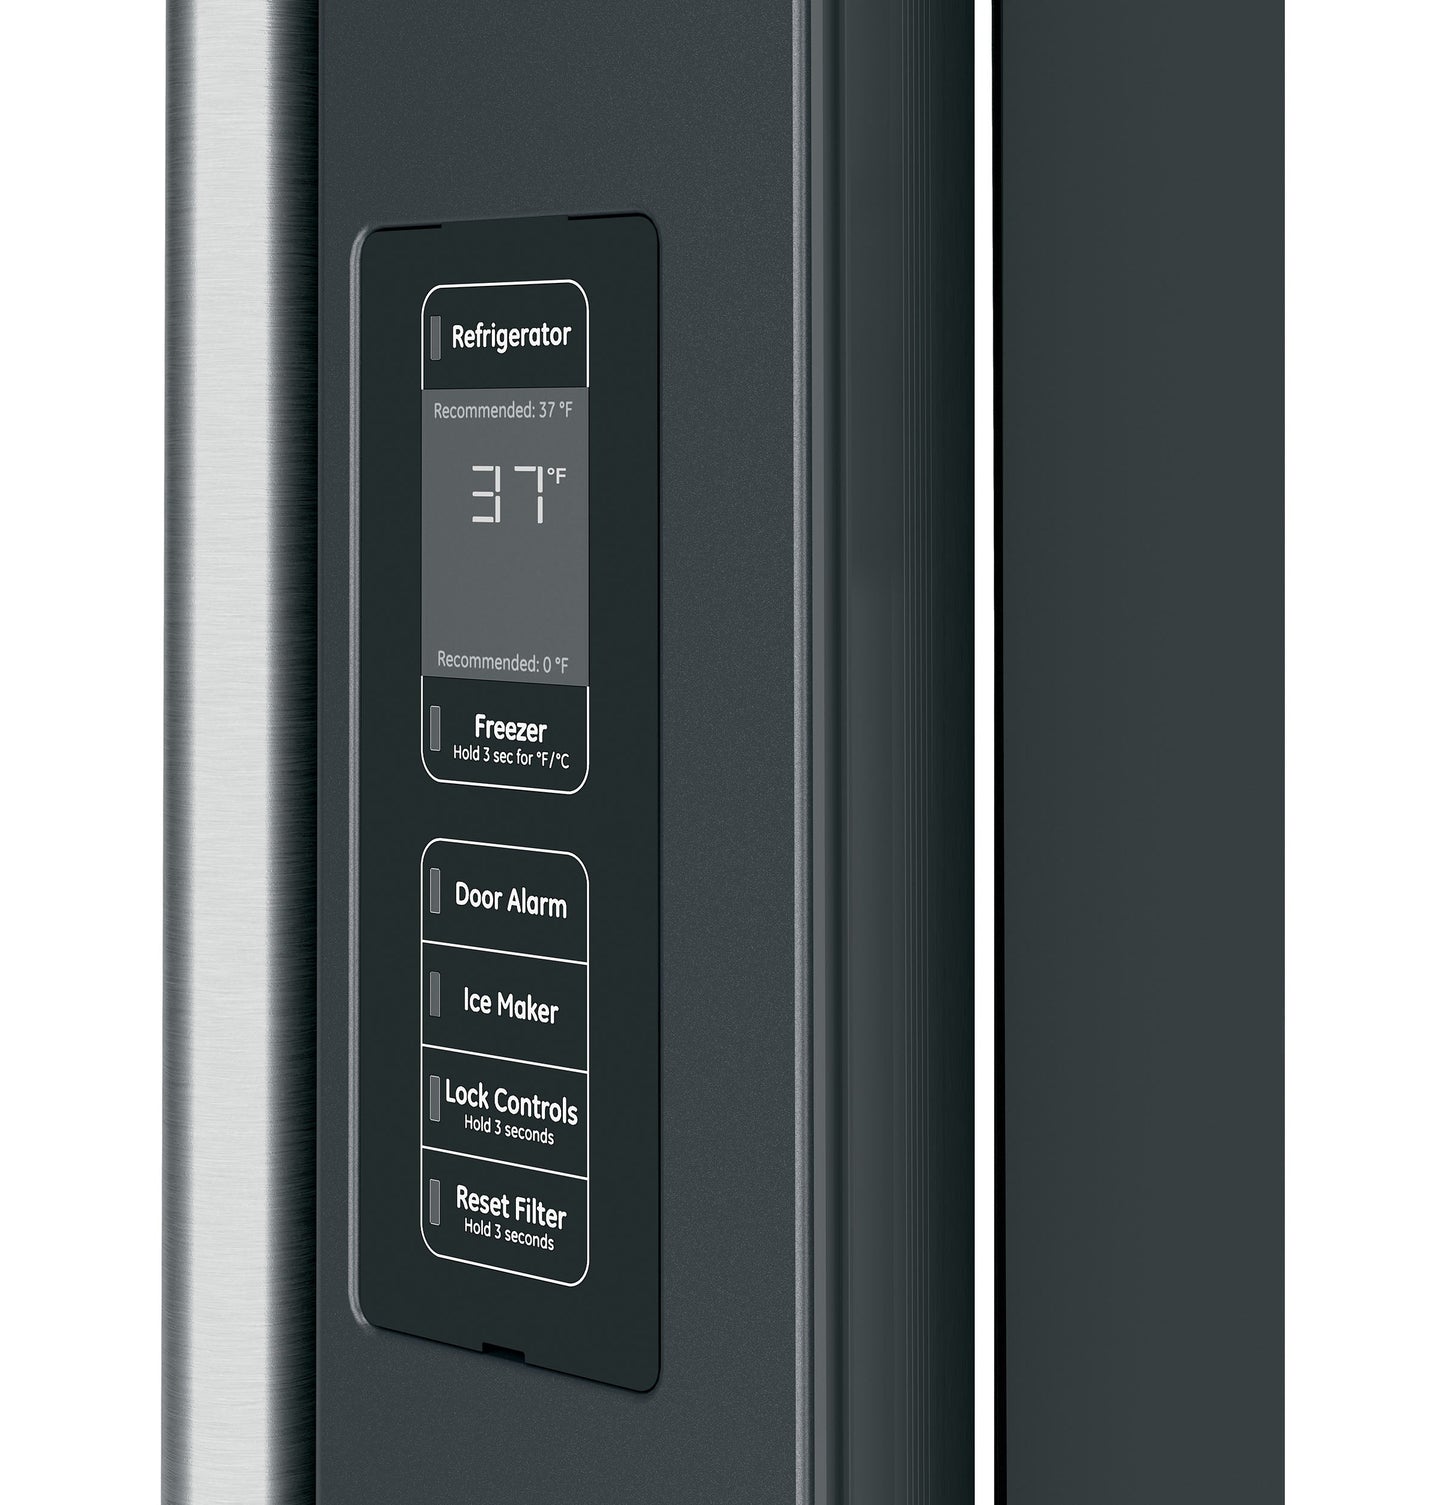 Café Energy Star® 23.1 Cu. Ft. Counter-Depth French-Door Refrigerator Matte Black - CWE23SP3MD1